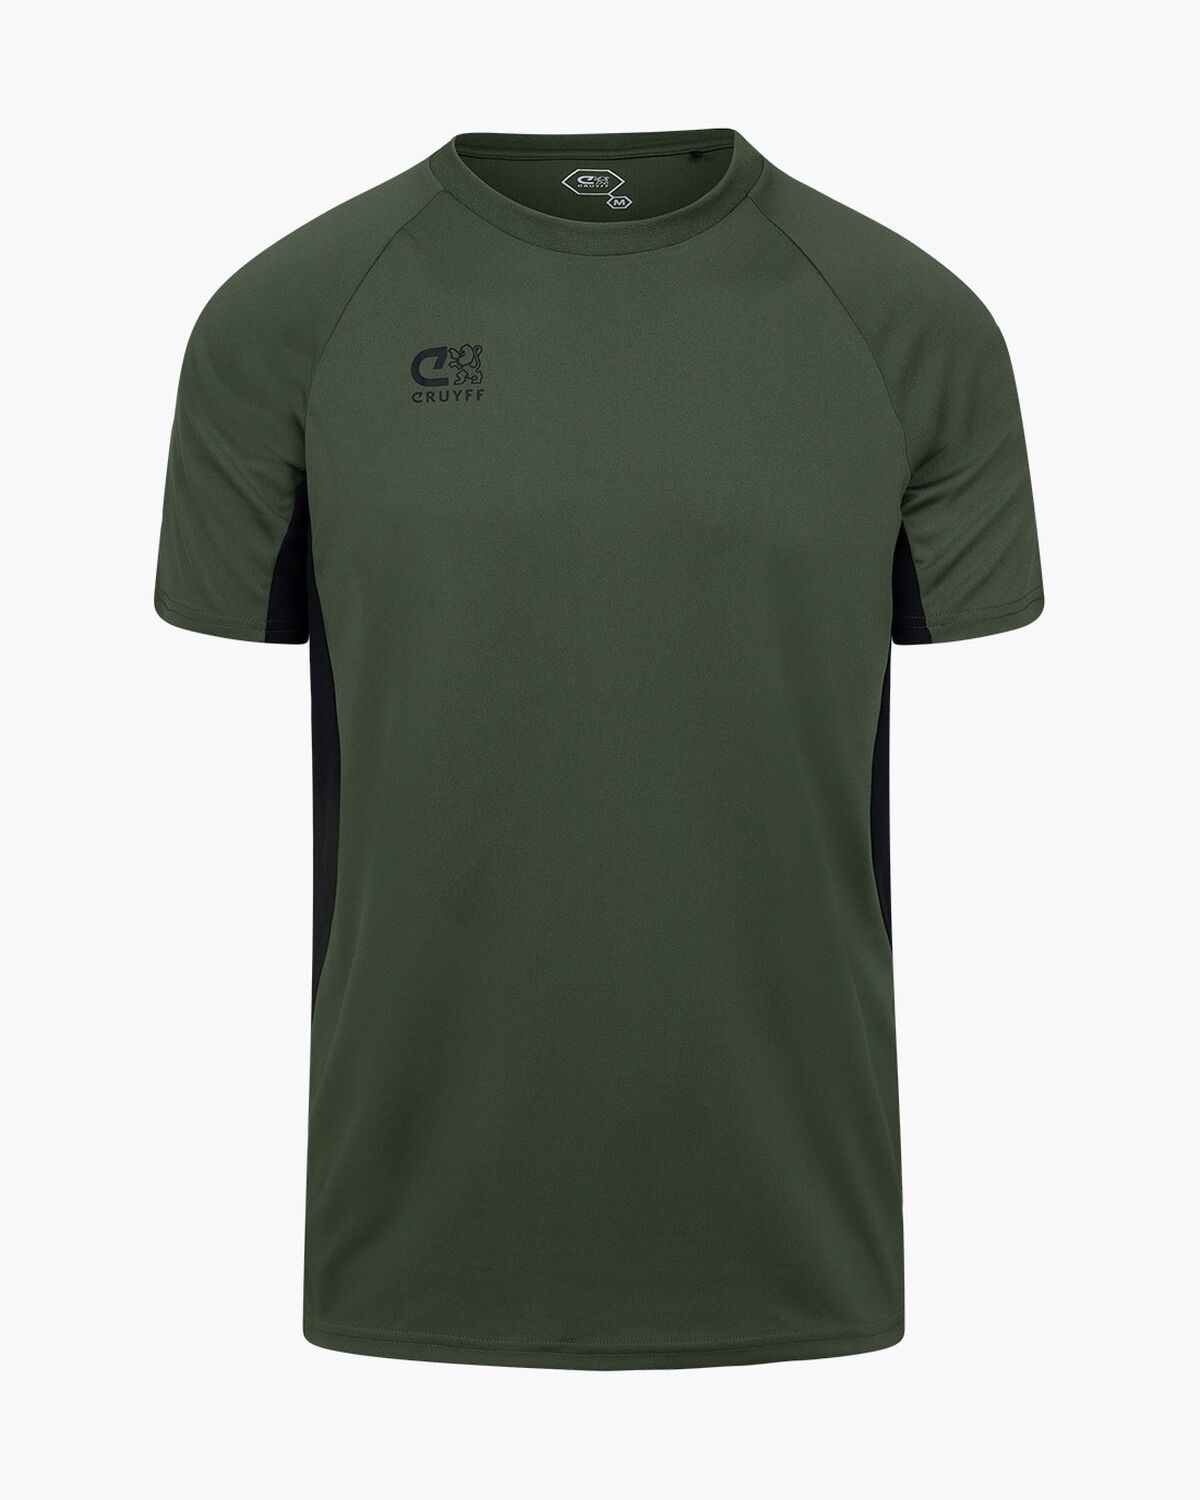 Cruyff Tech Turn Shirt Senior, Green/Black, hi-res